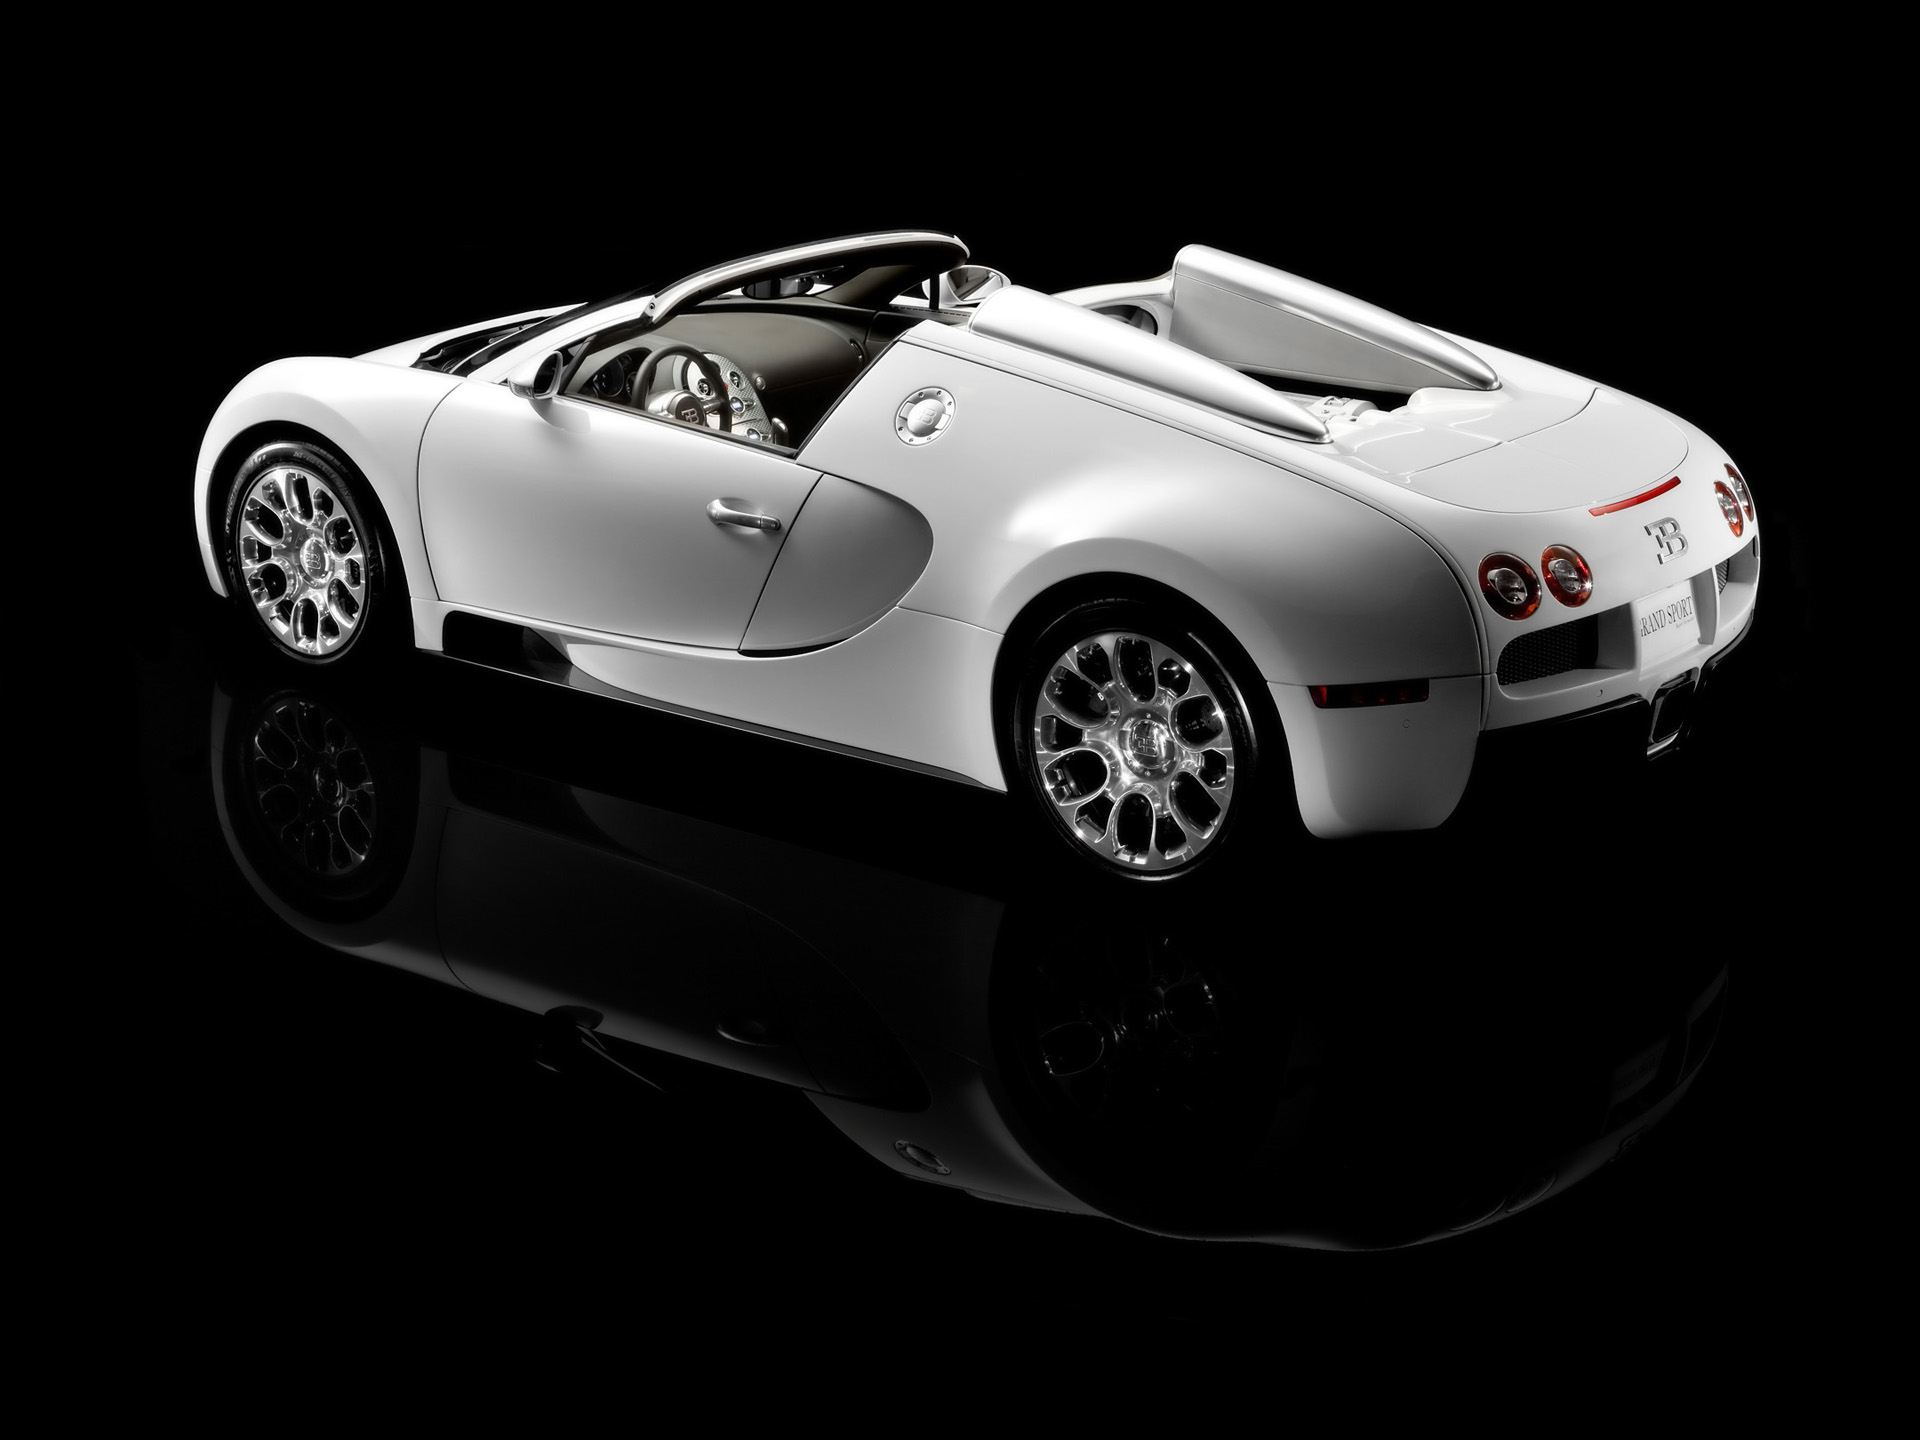 329138 descargar imagen vehículos, bugatti veyron 16 4 gran deporte, bugatti: fondos de pantalla y protectores de pantalla gratis